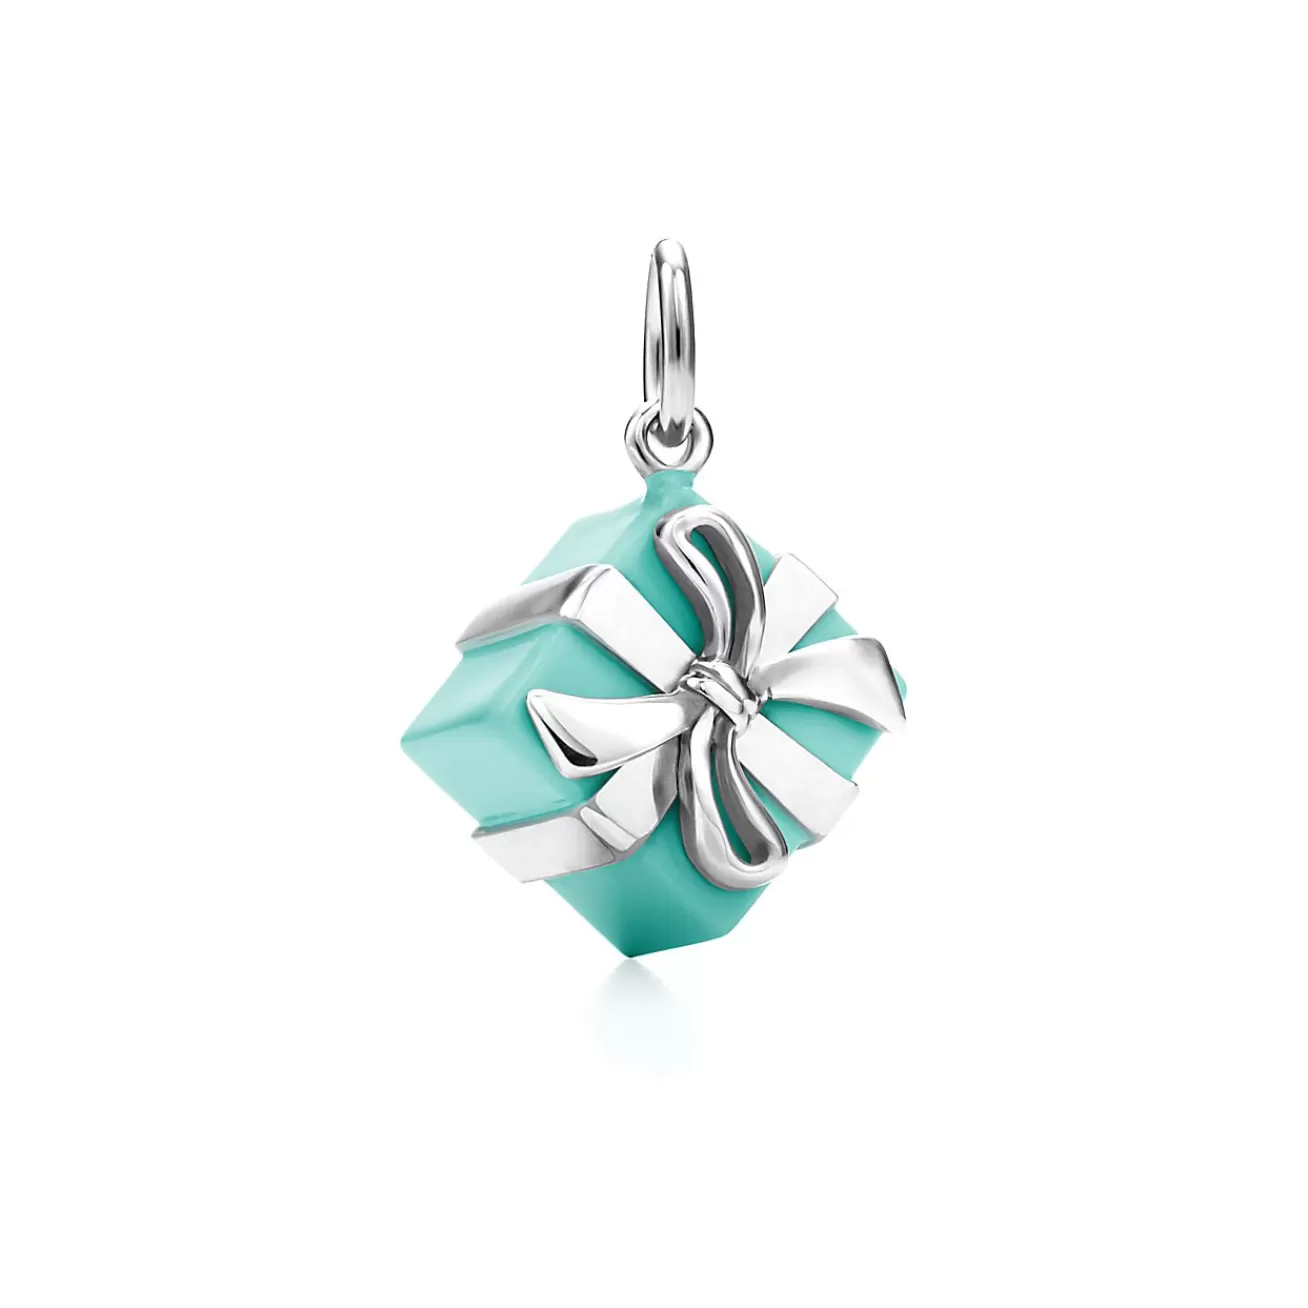 Tiffany & Co. Tiffany Blue Box® charm in sterling silver with Tiffany Blue® enamel finish. | ^ Sterling Silver Jewelry | Tiffany Blue® Gifts